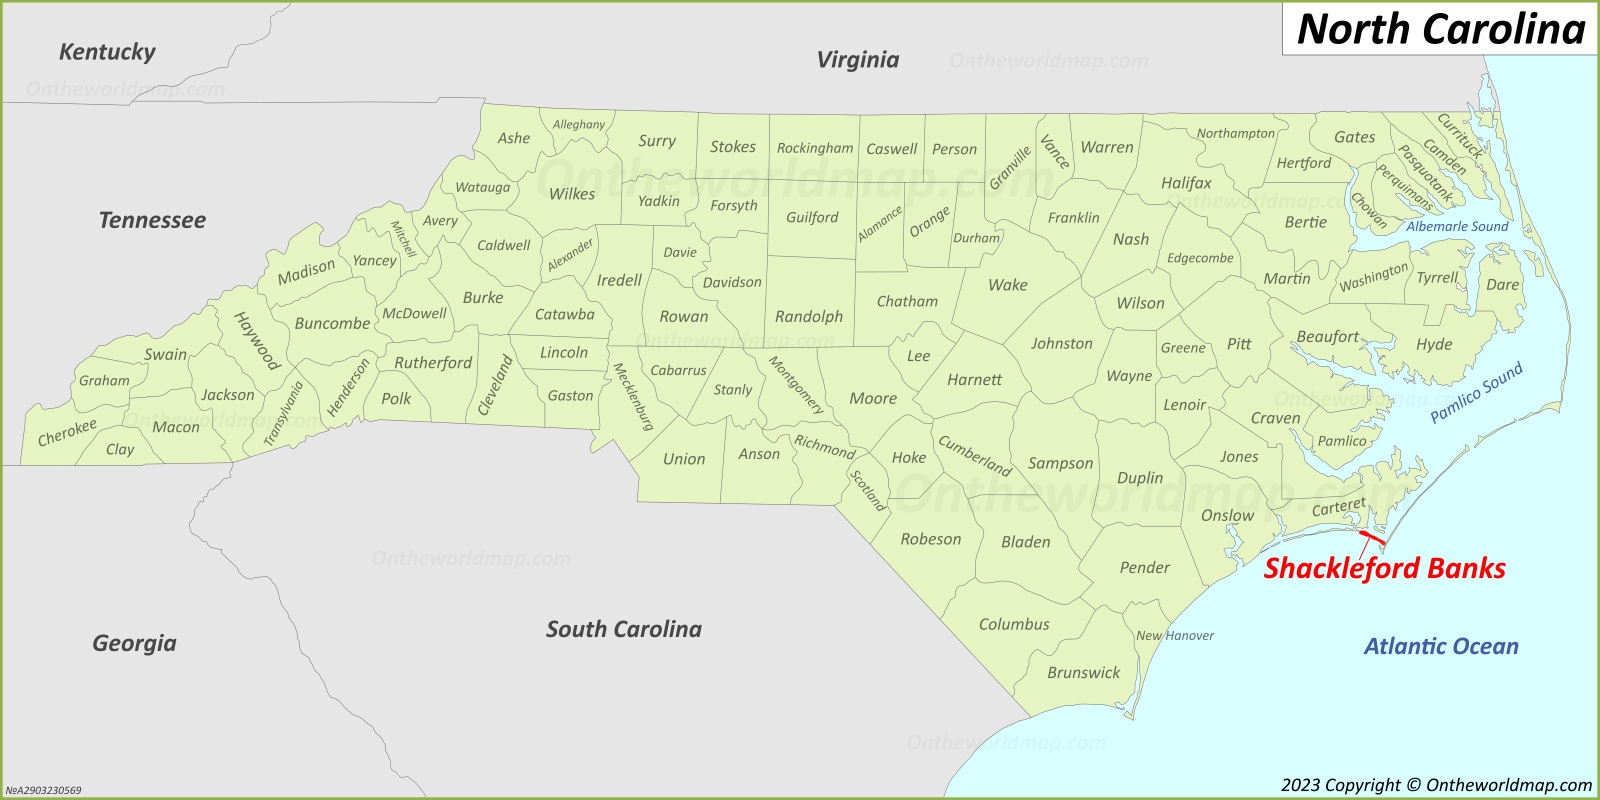 Shackleford Banks Location On The North Carolina Map